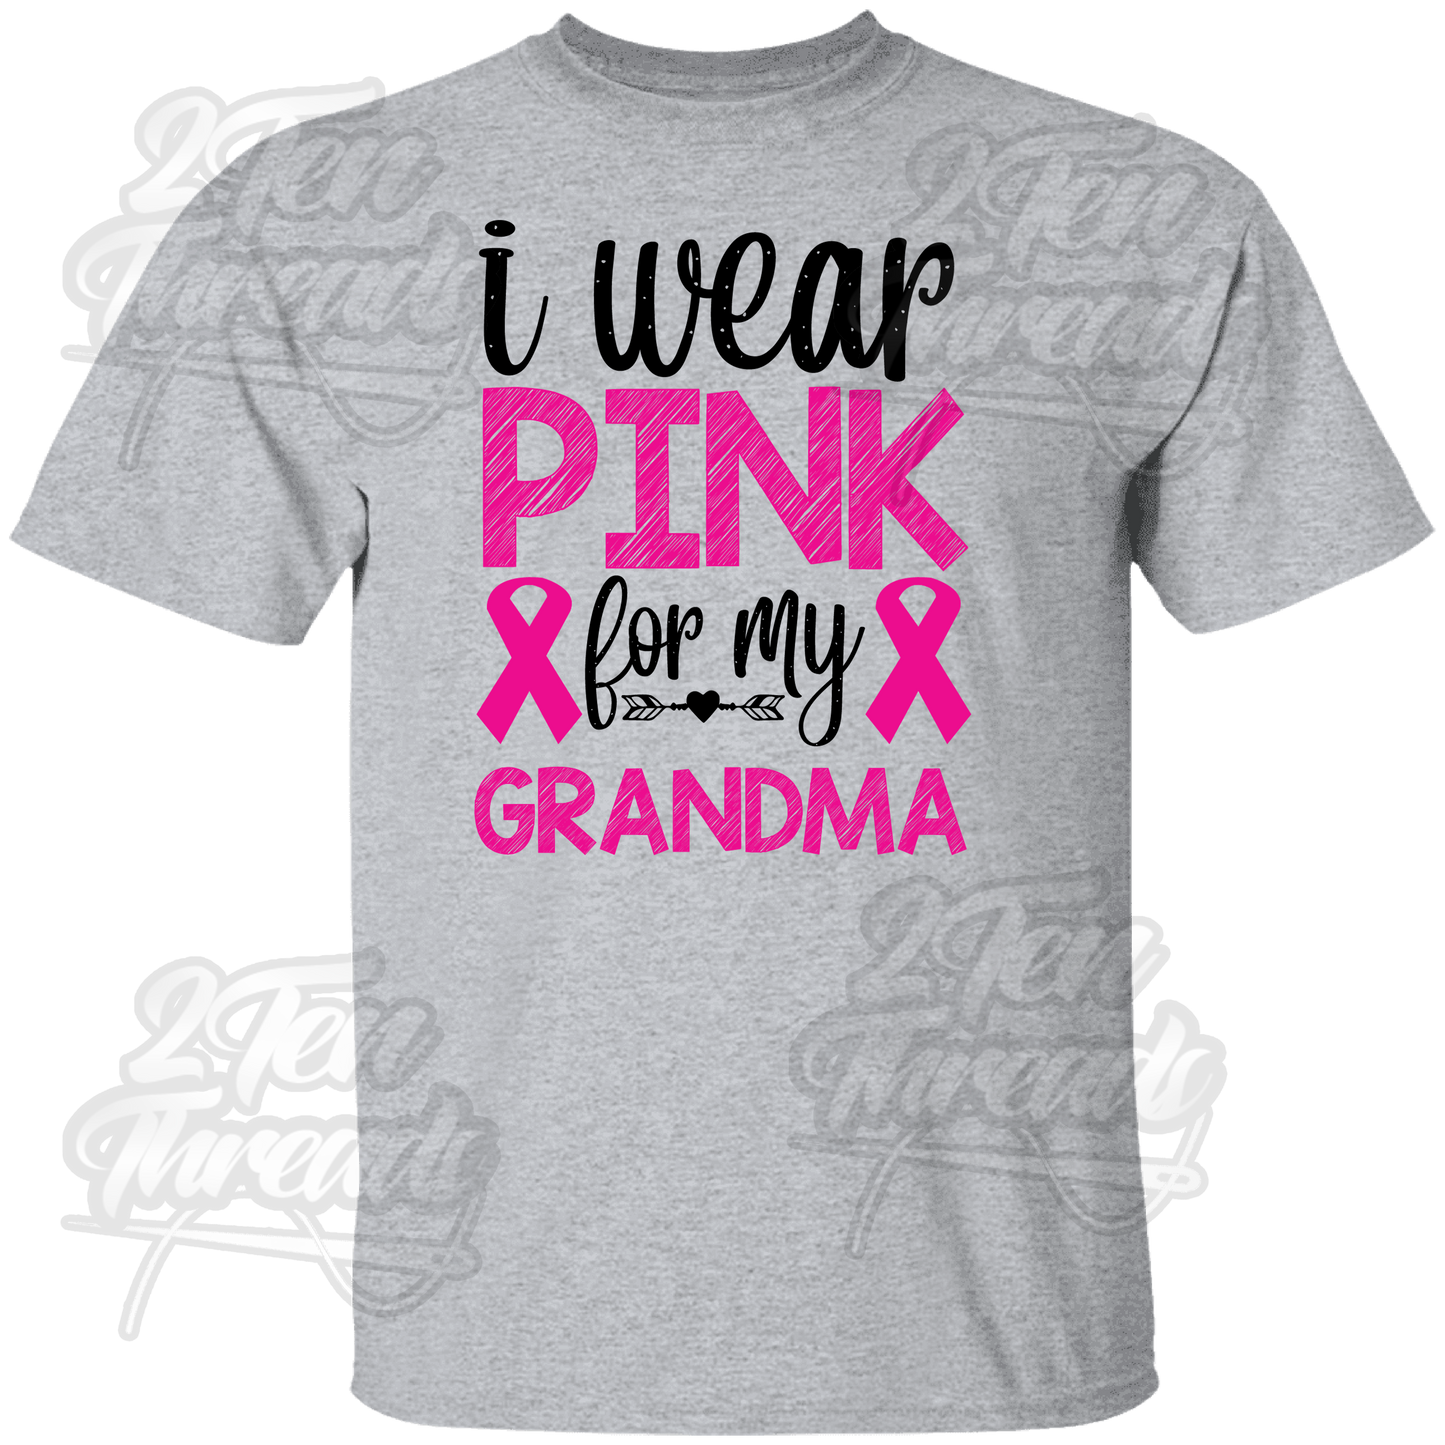 Pink for Grandma Shirt